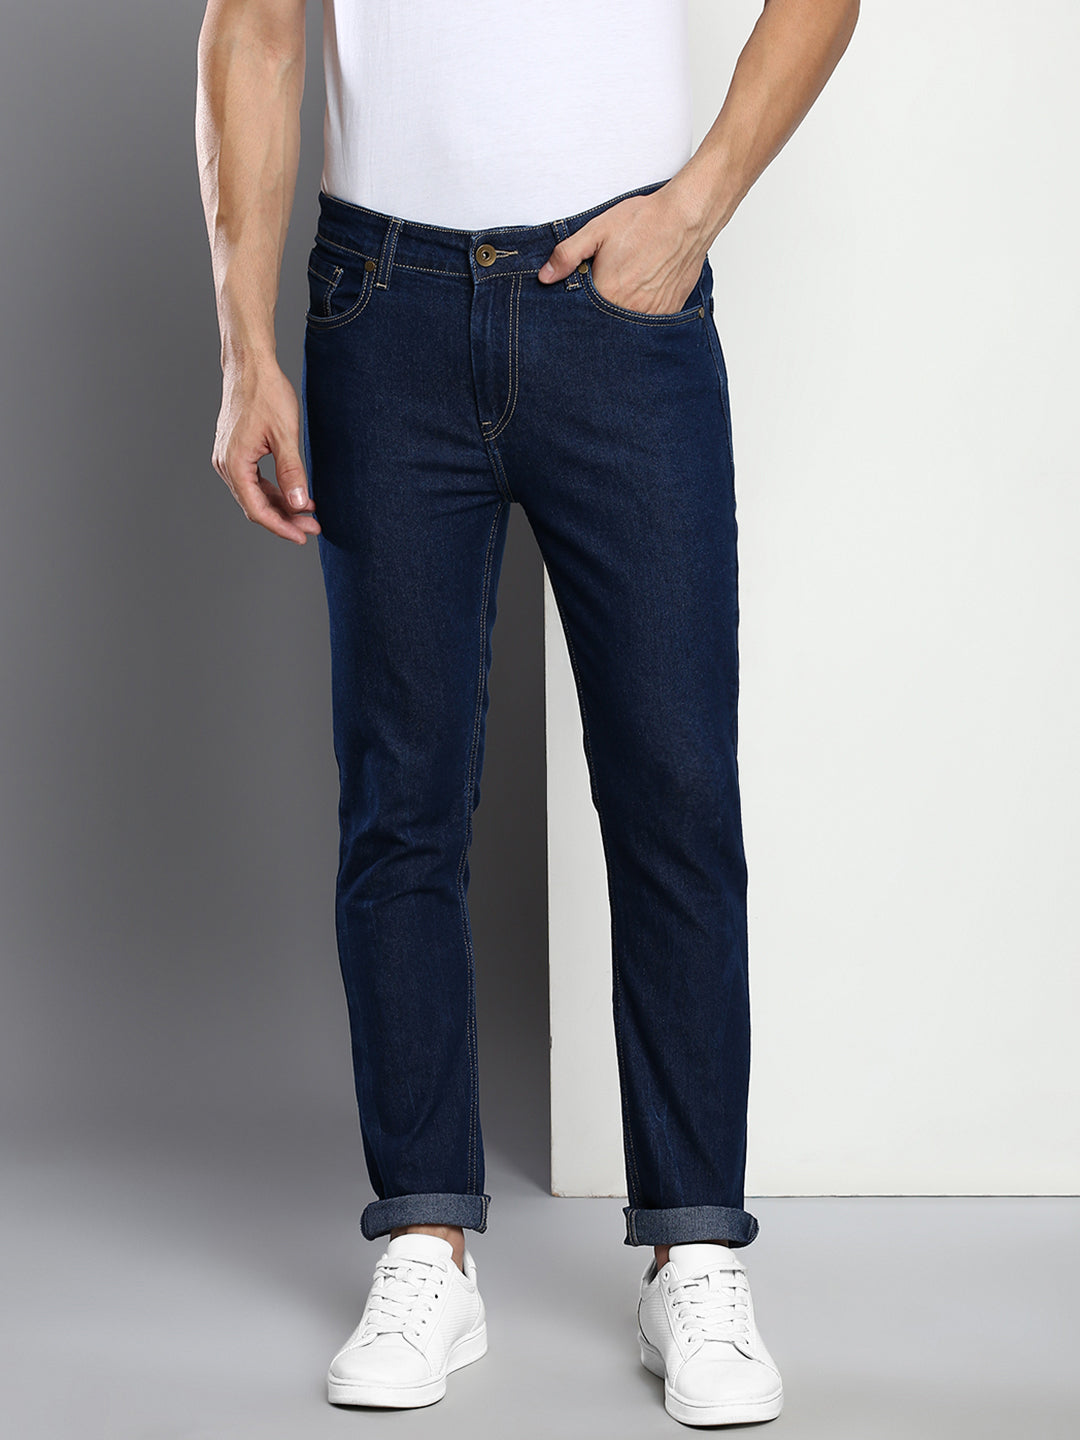 Trouser pant design/ latest pant mohri design/ trouse mohri design/मोहरी की  डिज़ाइन 